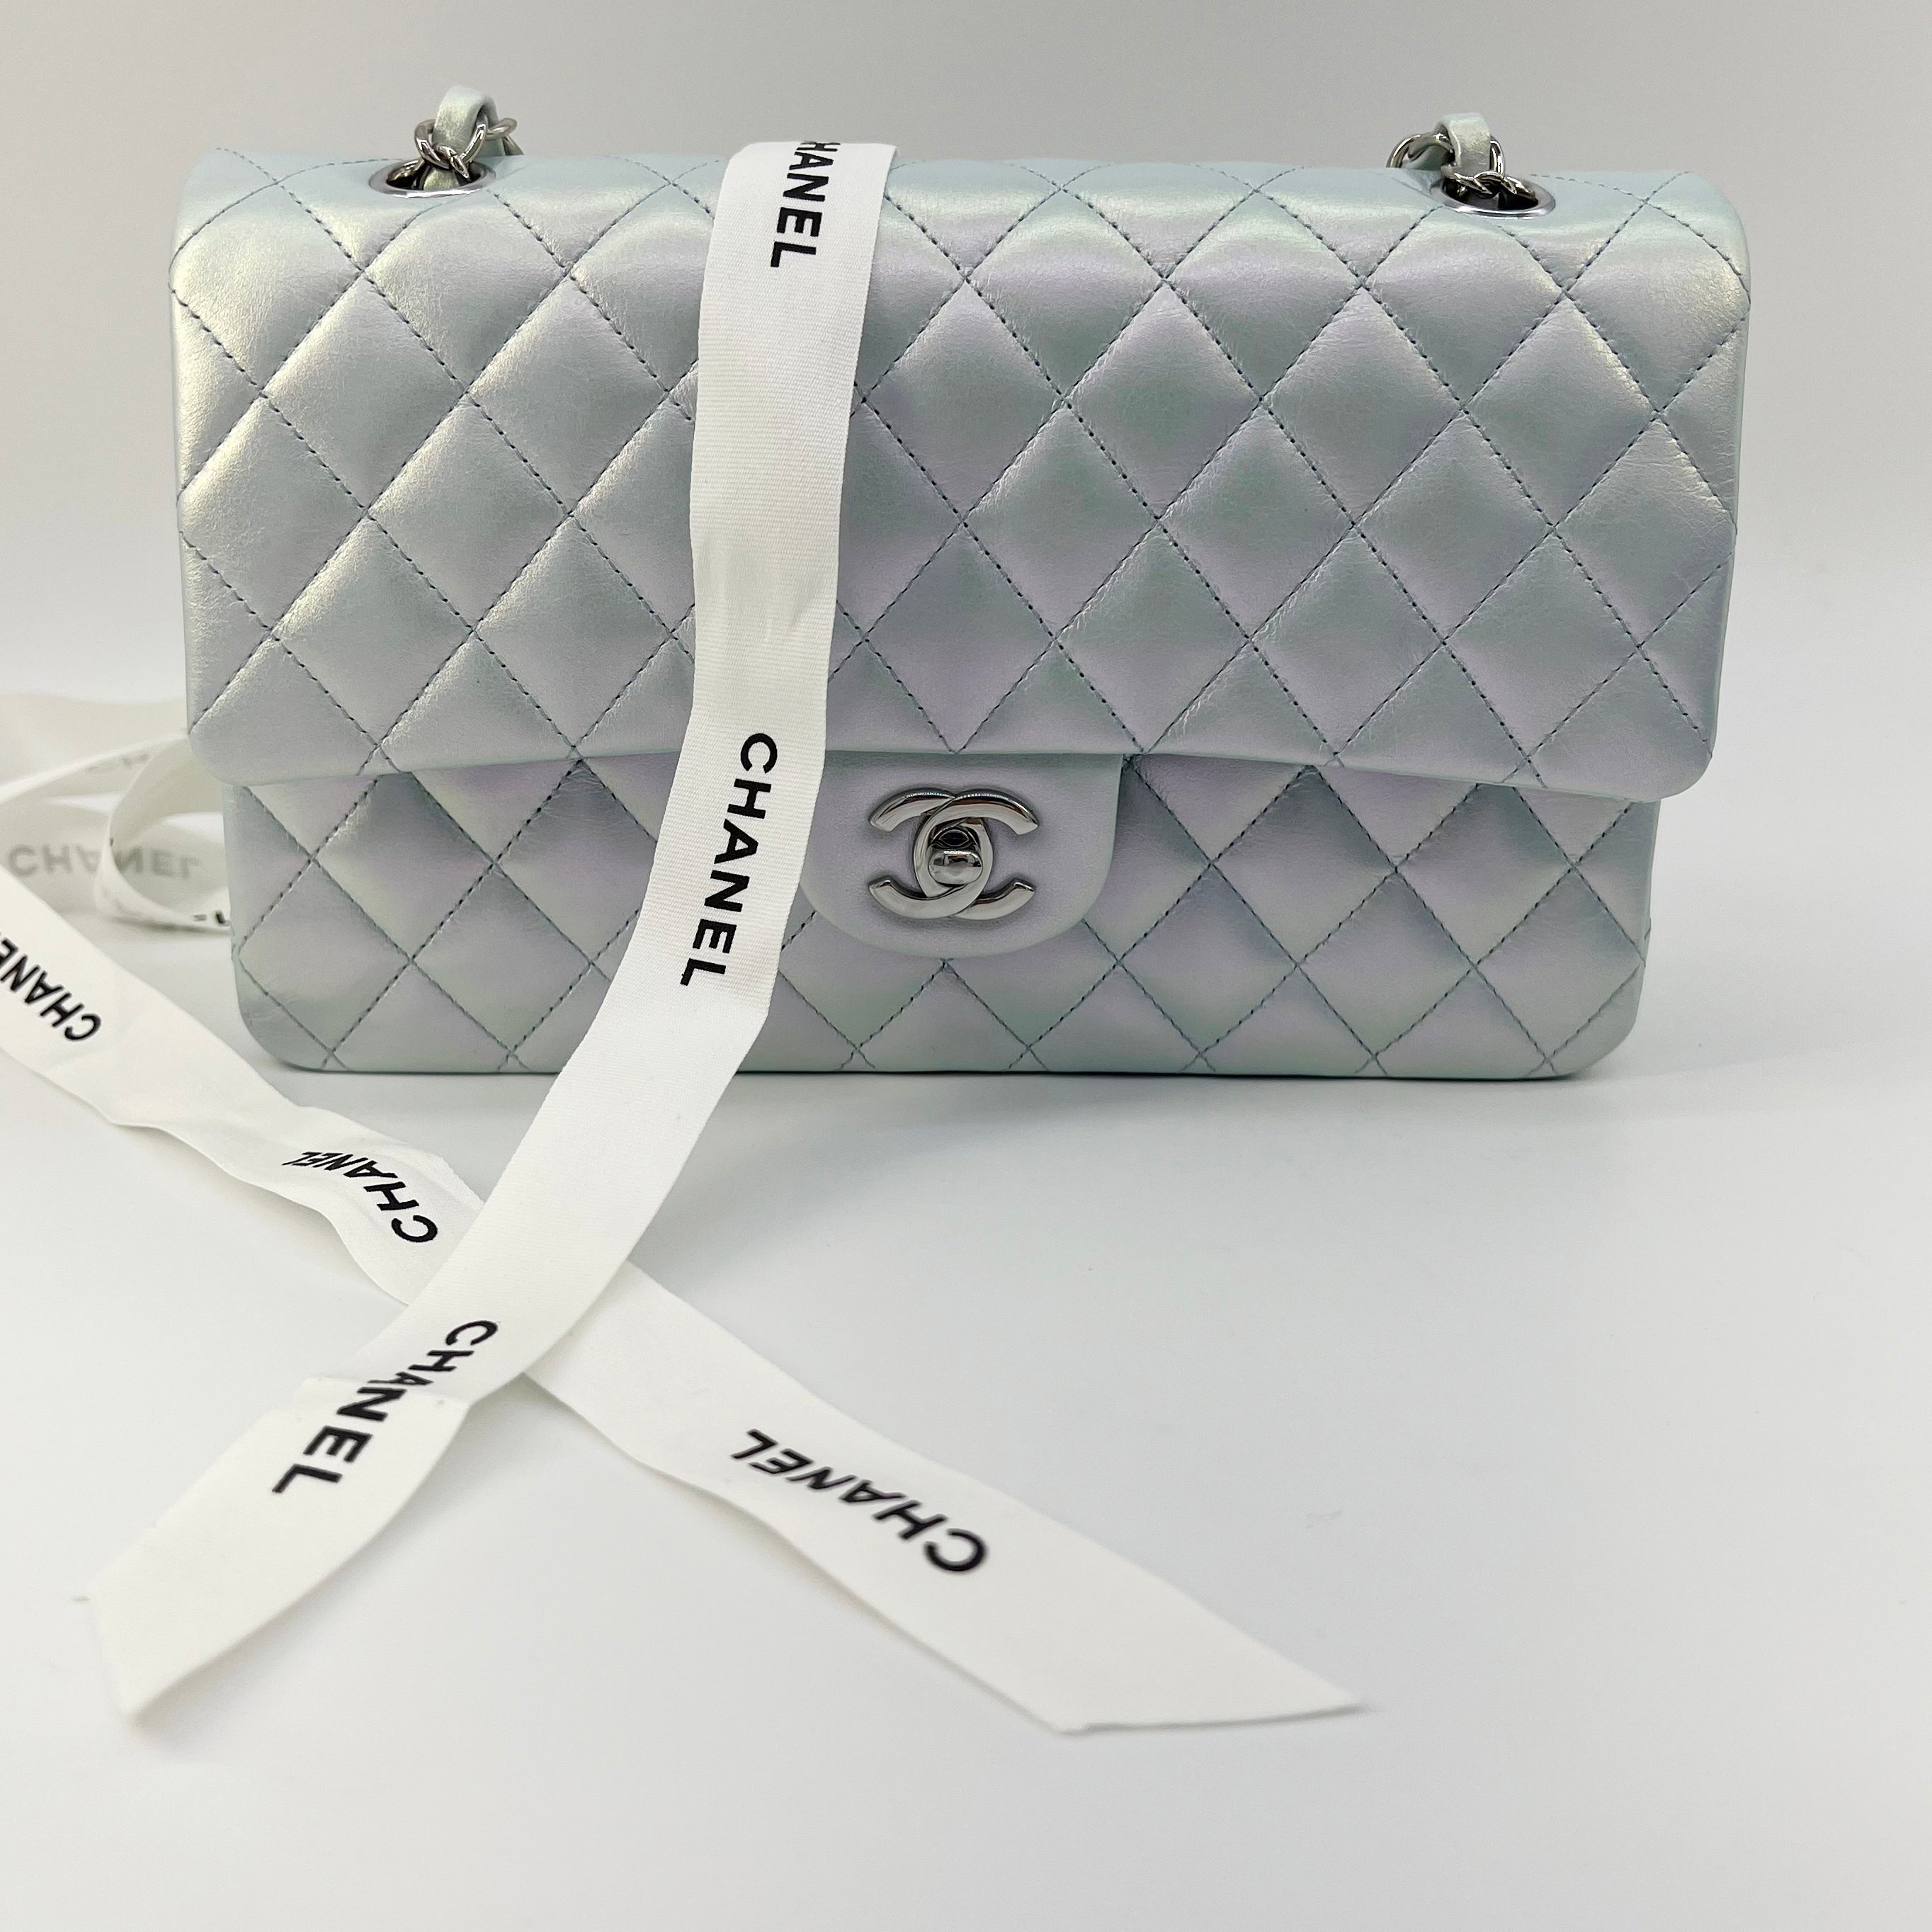 CHANEL Designer Bags & Handbags for Women, Authenticity Guaranteed